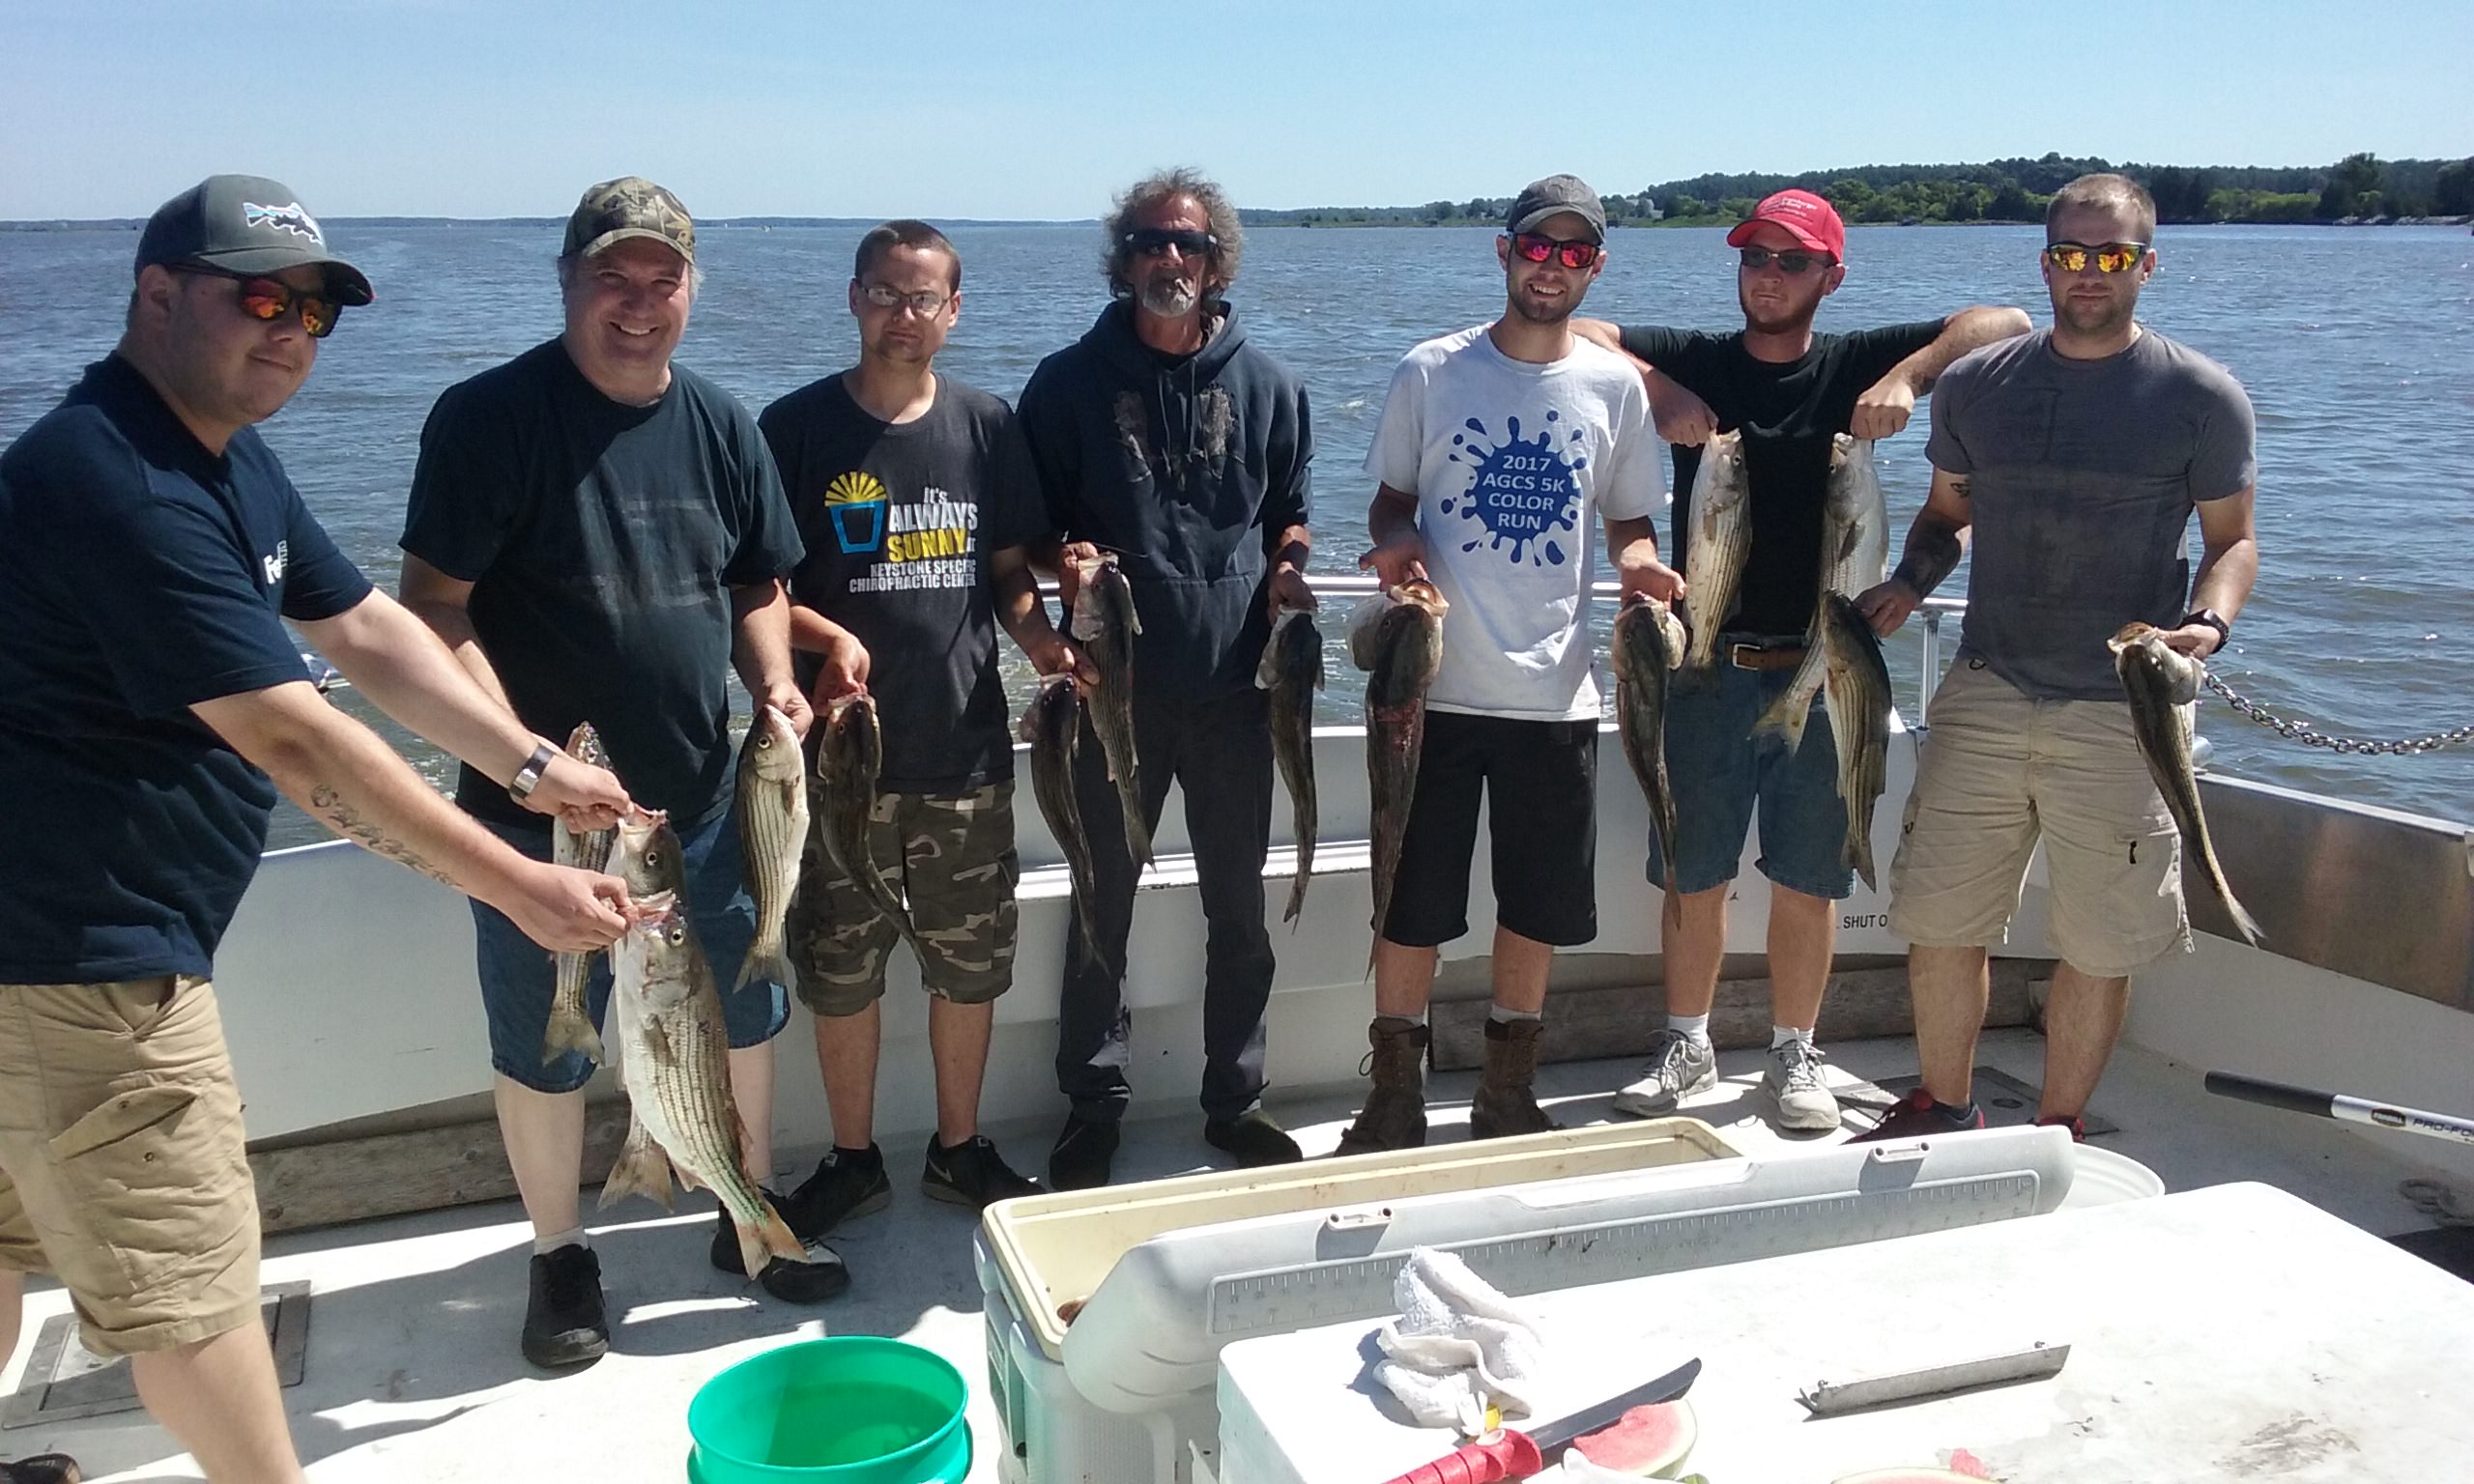 Bachelor Party Fishing On Chesapeake Bay!